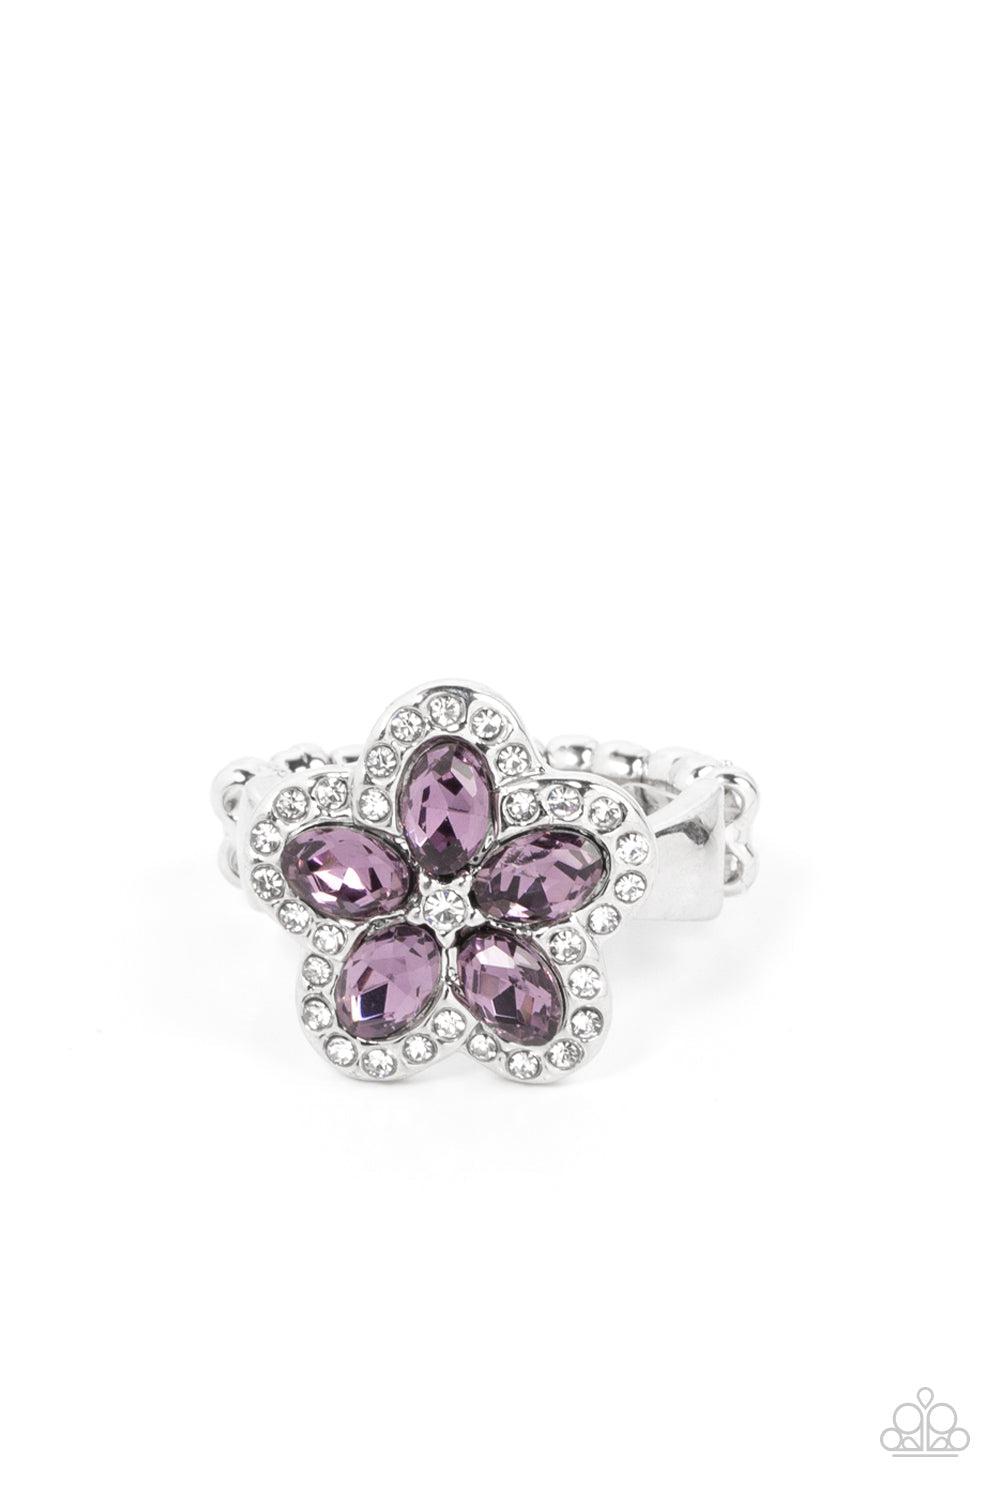 Efflorescent Envy Purple Rhinestone Flower Ring - Paparazzi Accessories- lightbox - CarasShop.com - $5 Jewelry by Cara Jewels